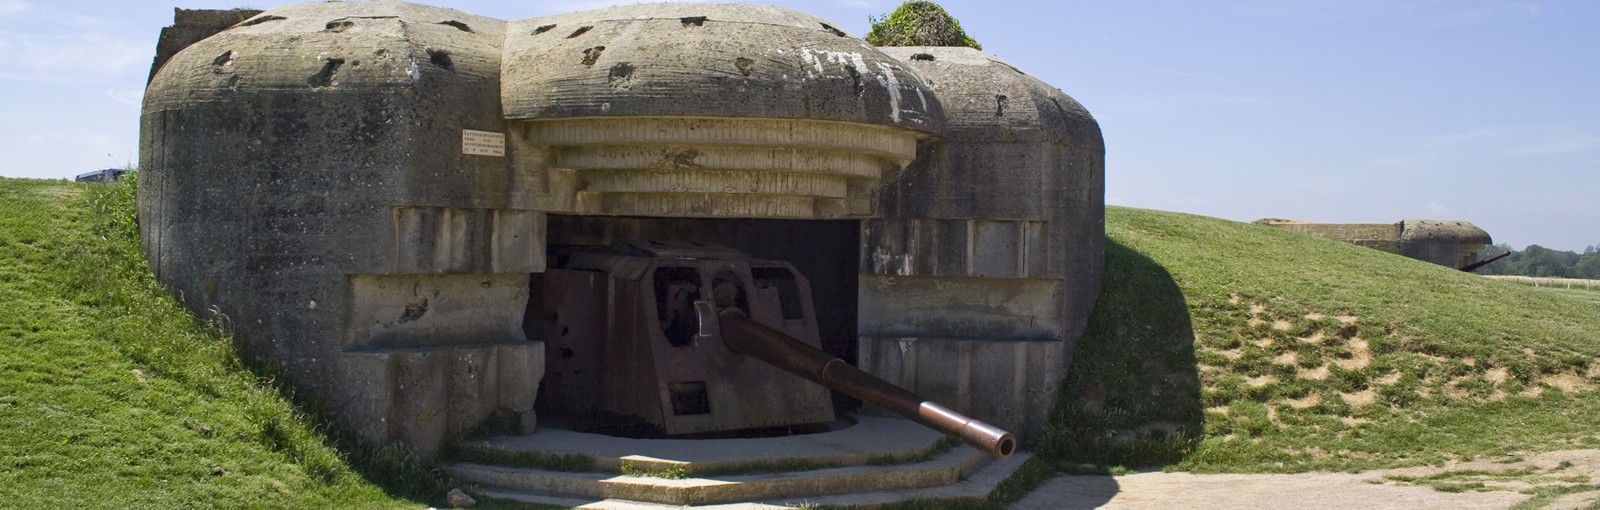 Longues-sur-mer - German battery